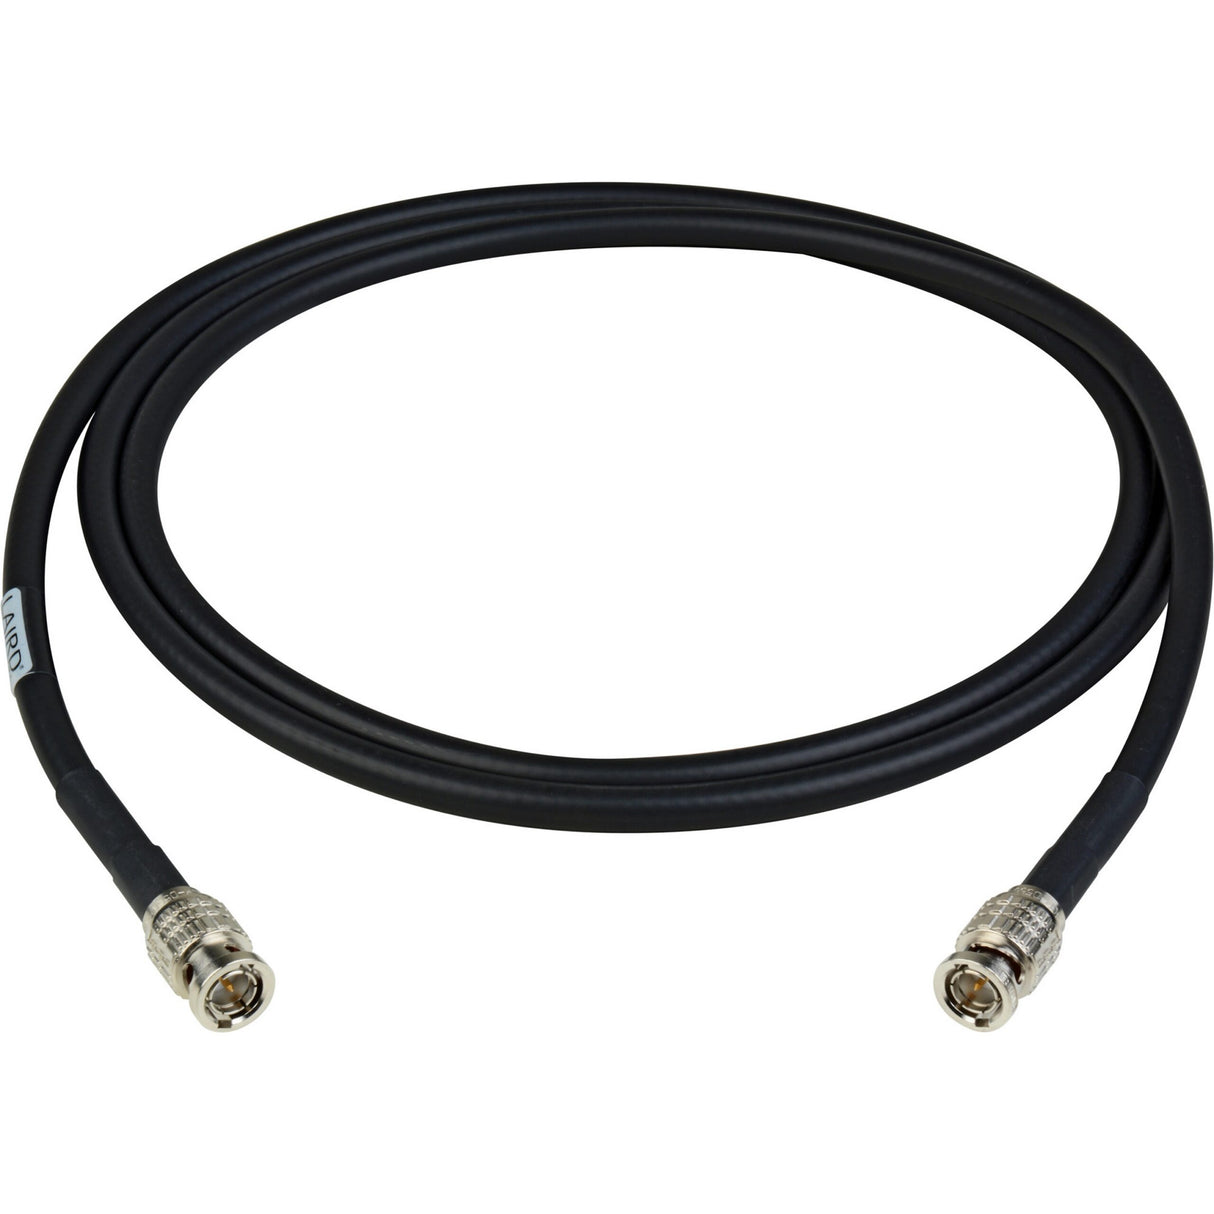 Laird 12GSDI-B-B-100 12G SDI Cable 4K UHD Video BNC Cable, 100-Foot